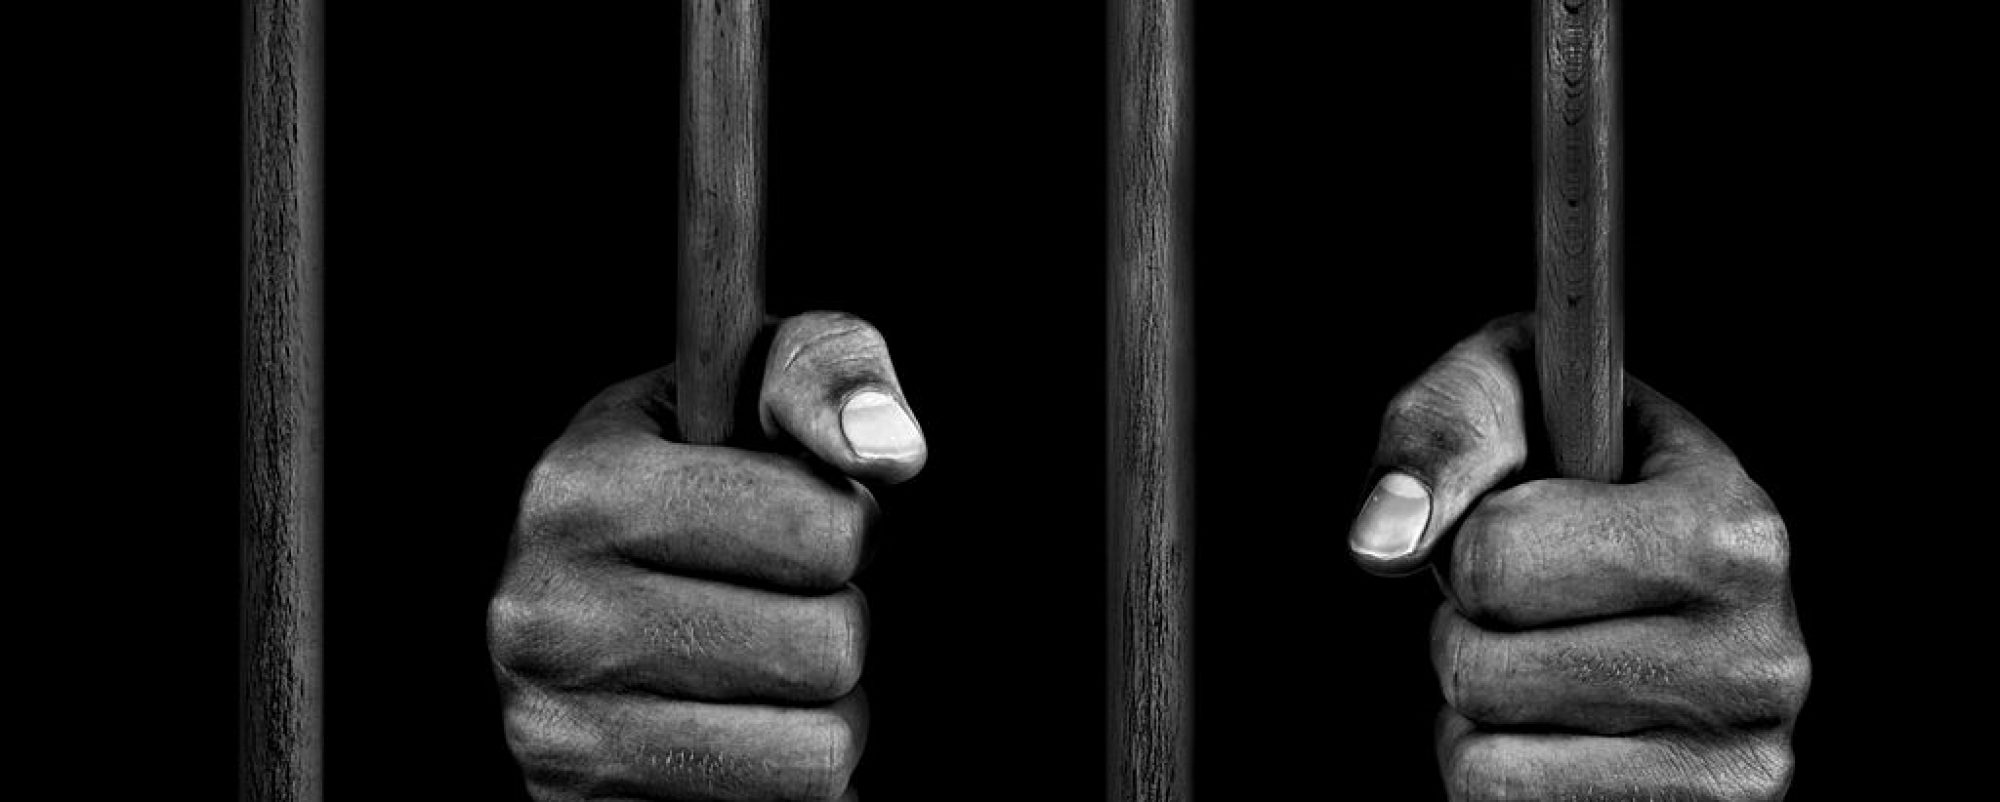 Incarceration Reform